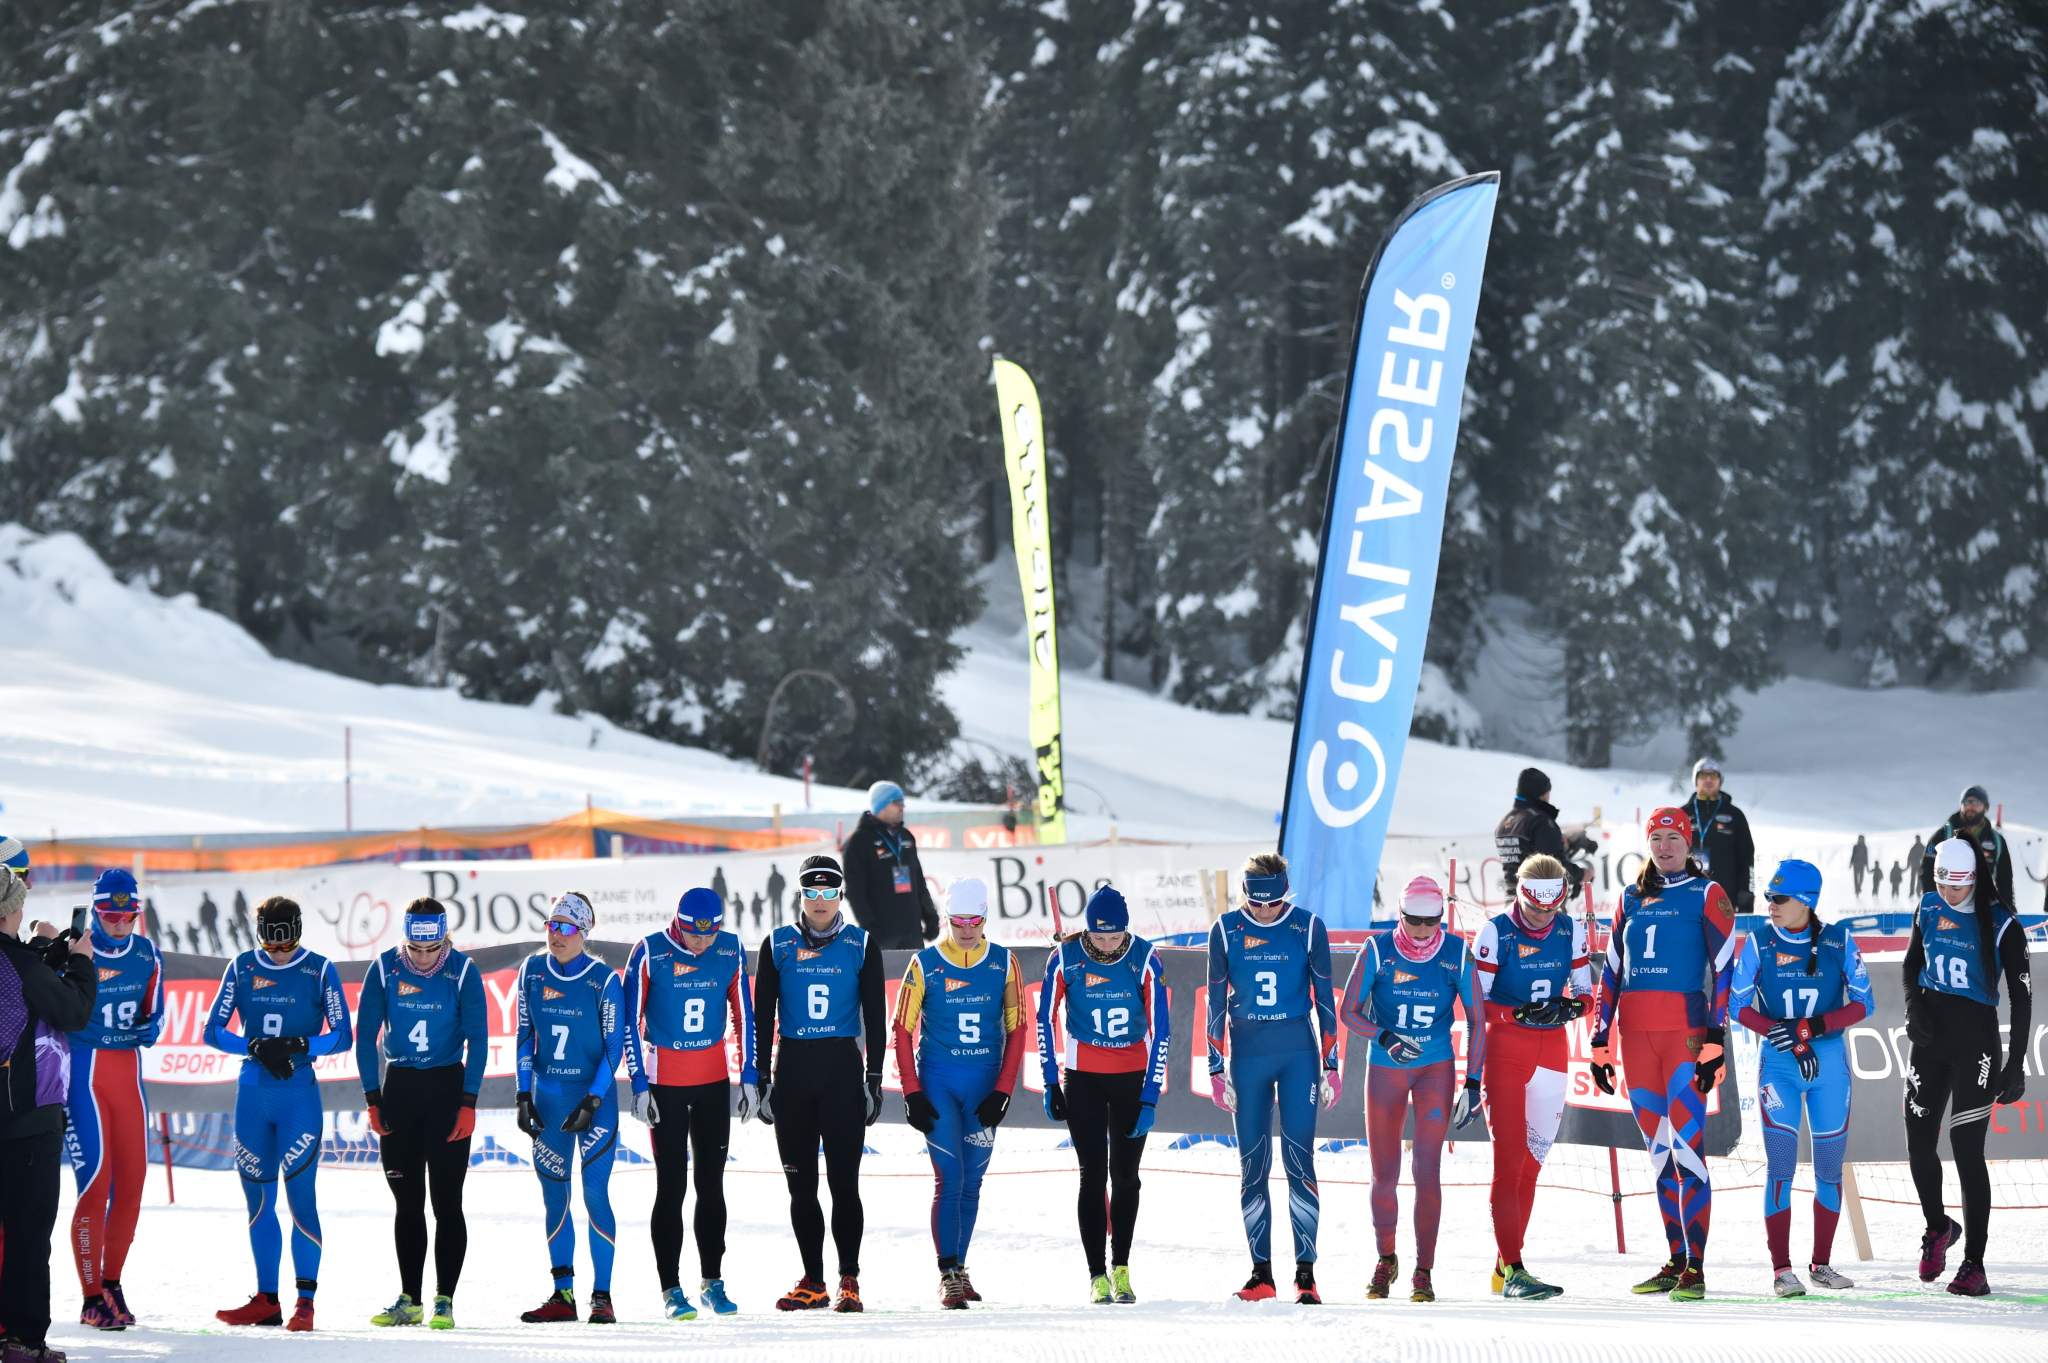 ITU launch Winter Triathlon World Cup